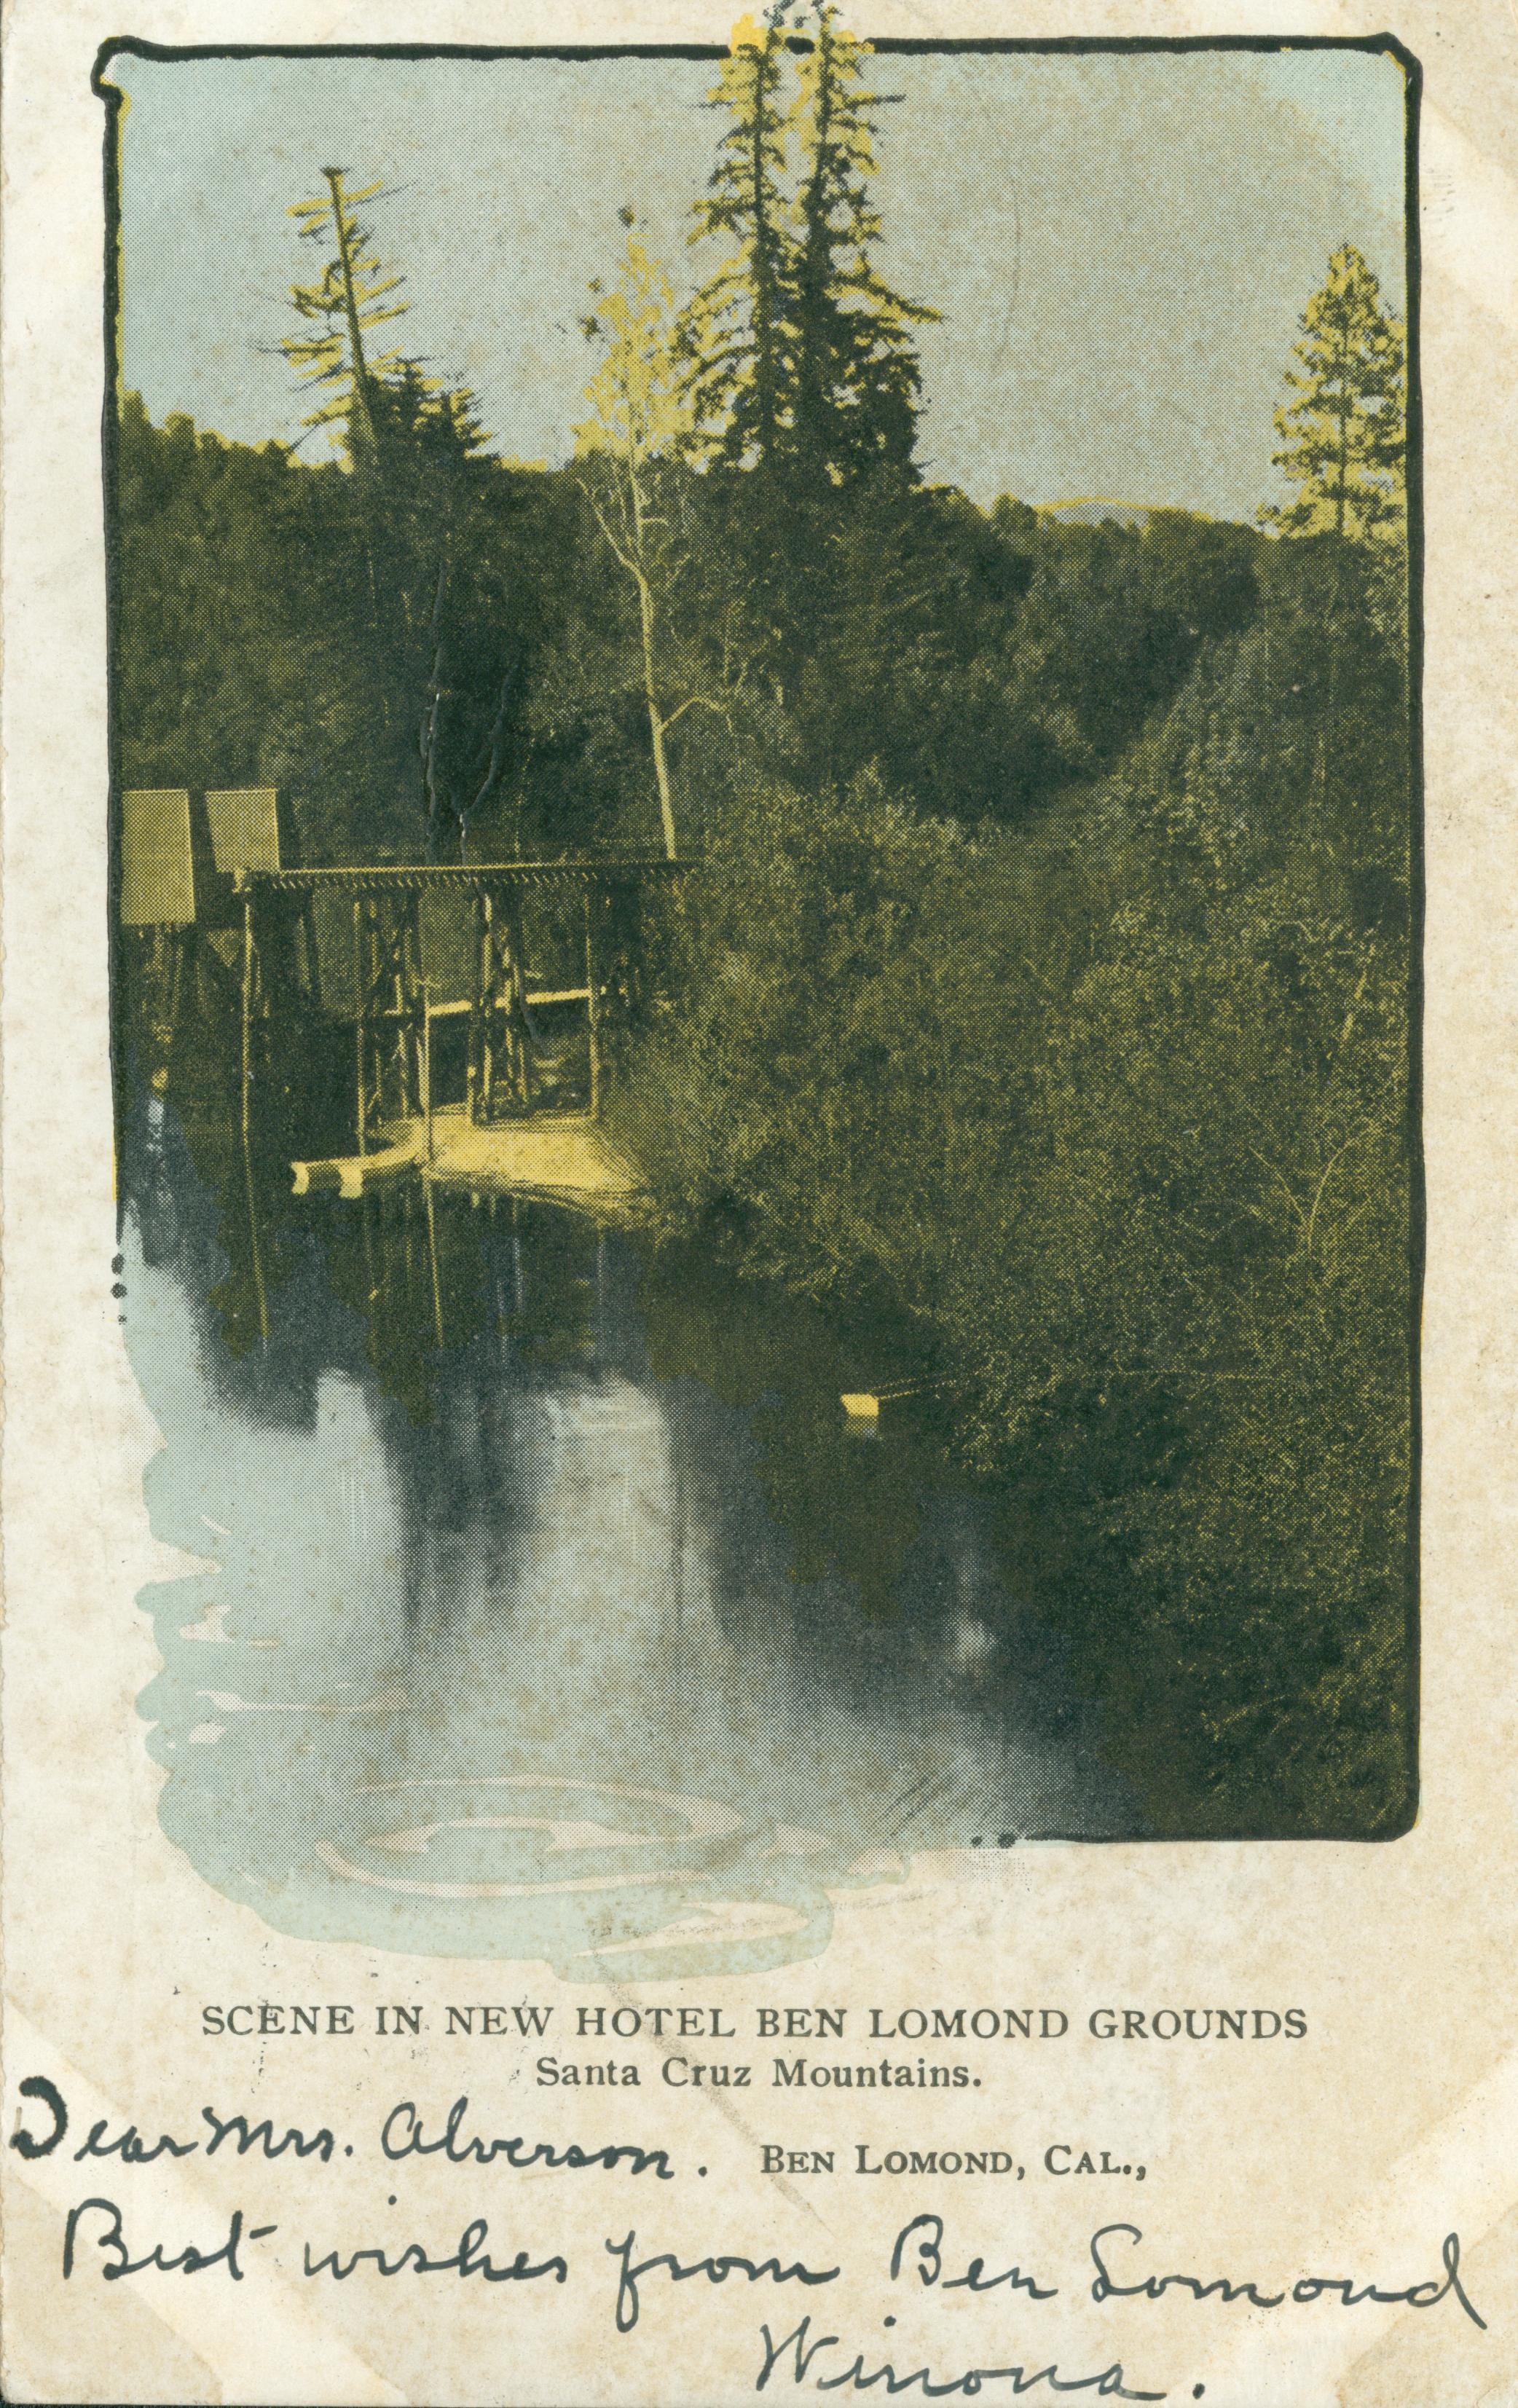 Shows a railroad trestle extending over a pond